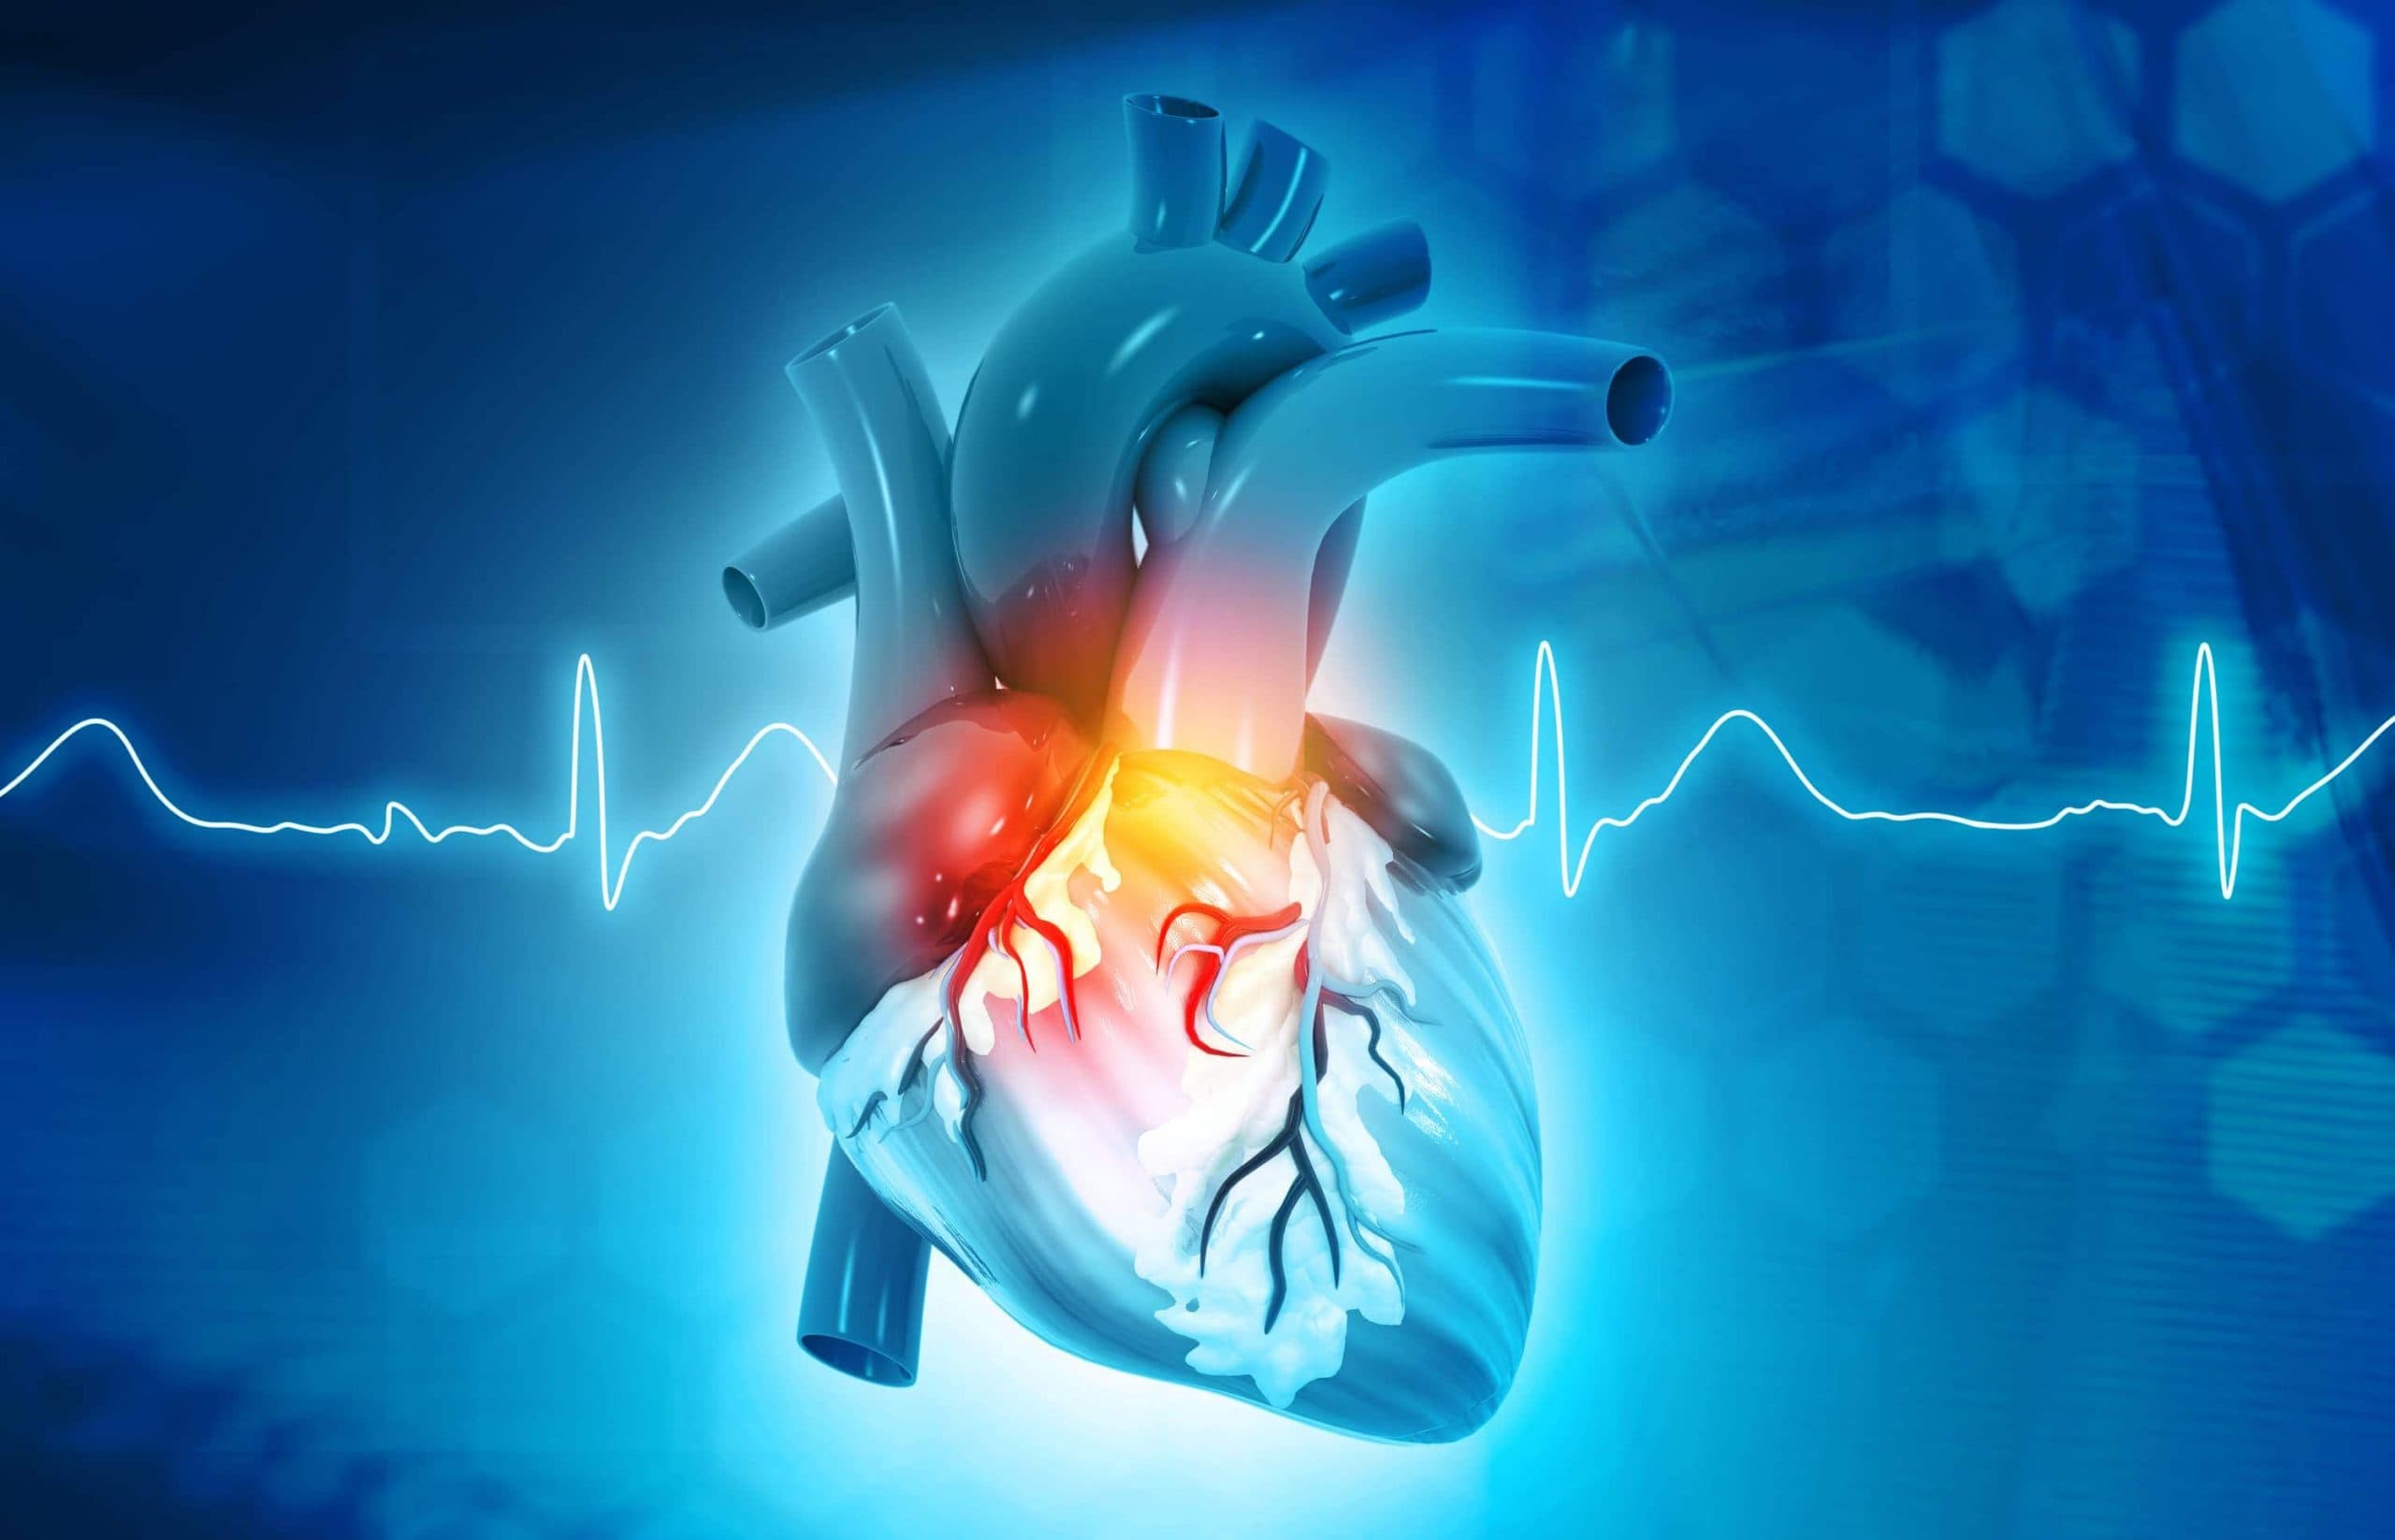 Эффективно снизить риск развития осложнений при фибрилляции предсердий позволяет ранний контроль сердечного ритма